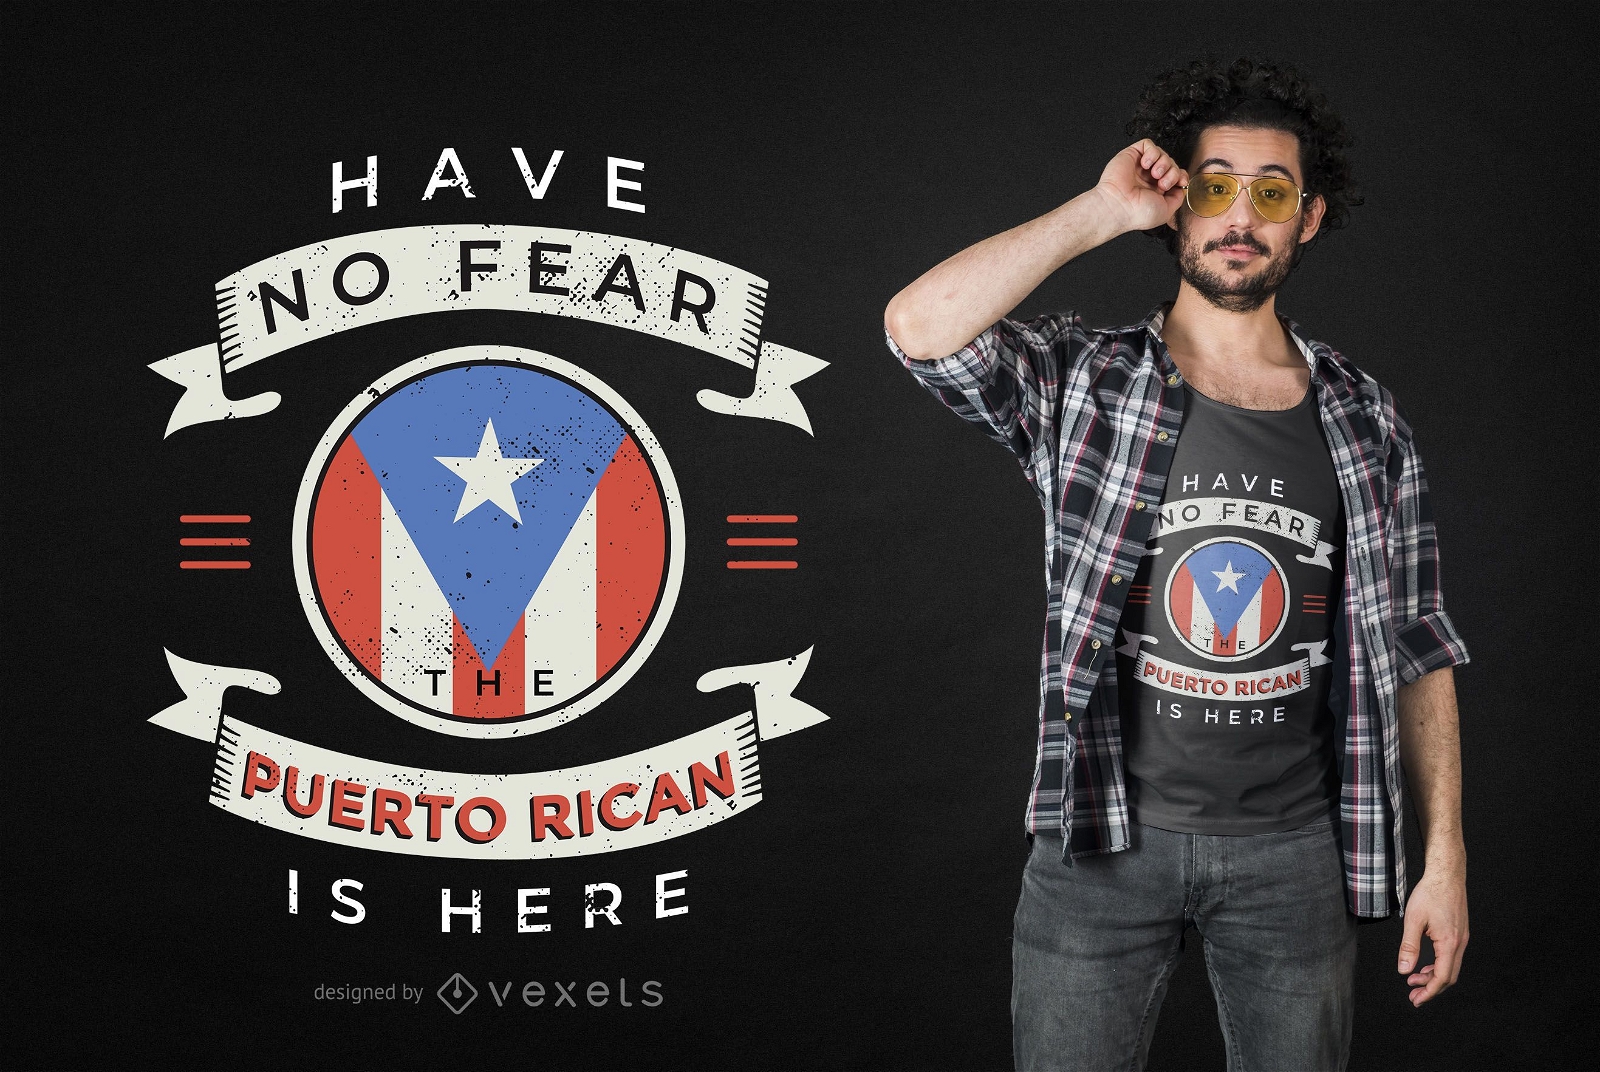 Puerto rican quote t-shirt design